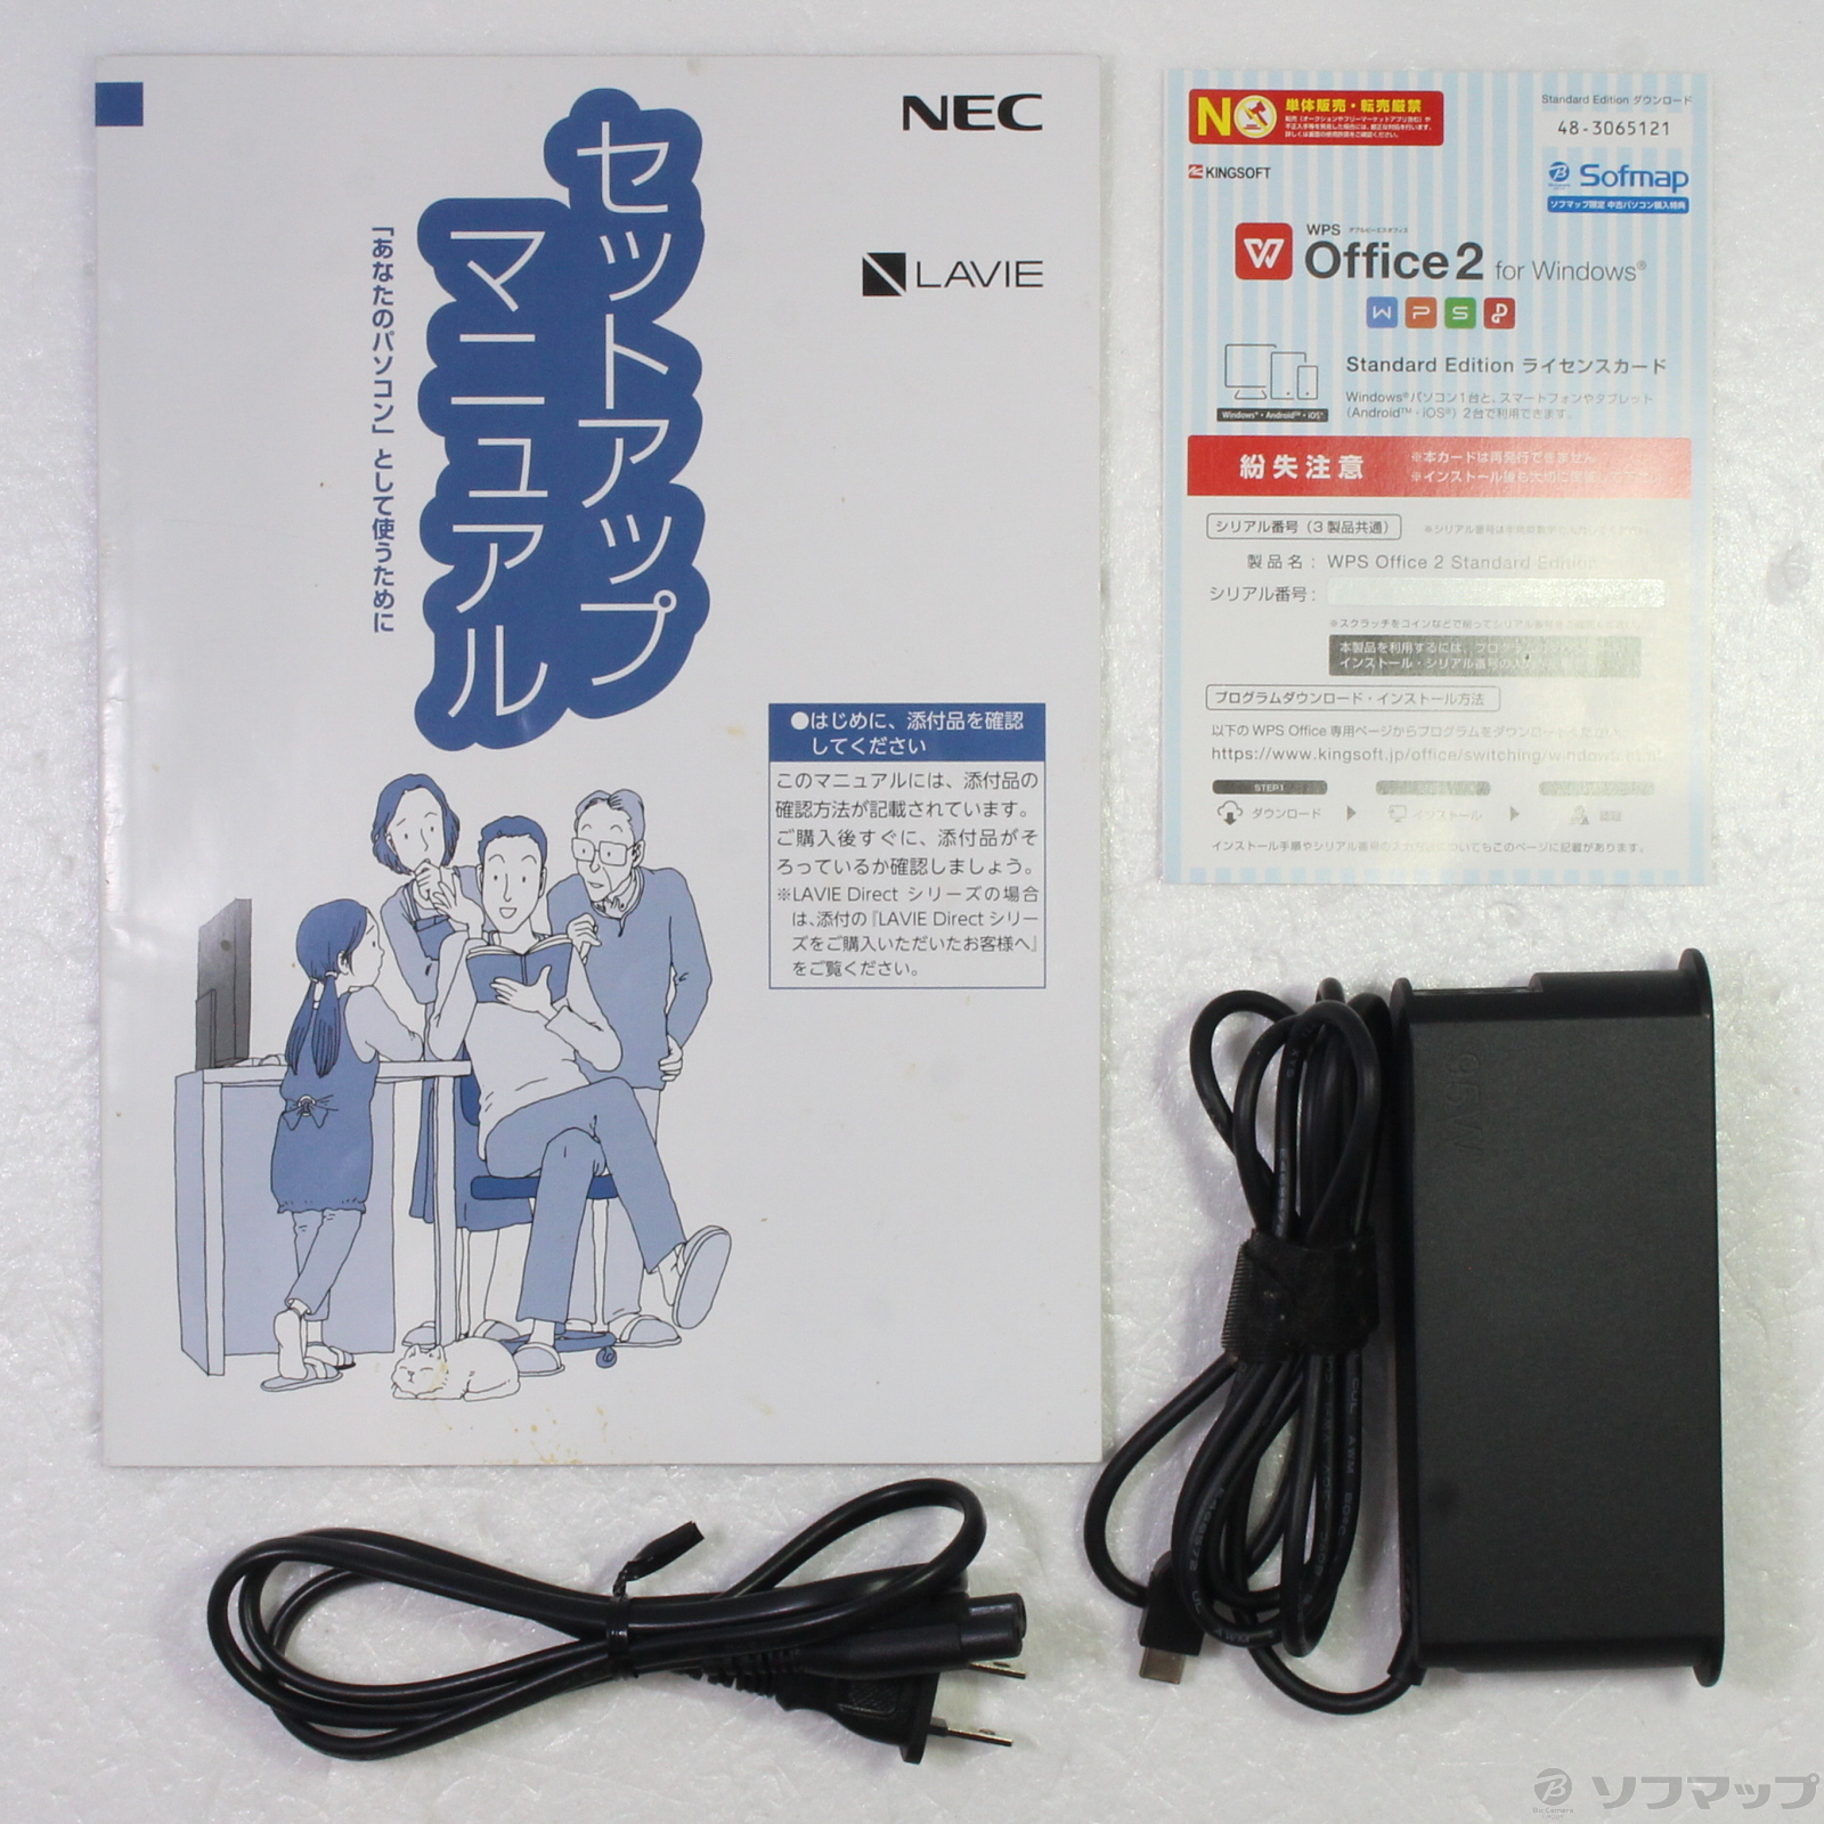 NECパーソナル PC-LV750RAL LAVIE VEGA LV750 RAL アルマイトネイビー - 3